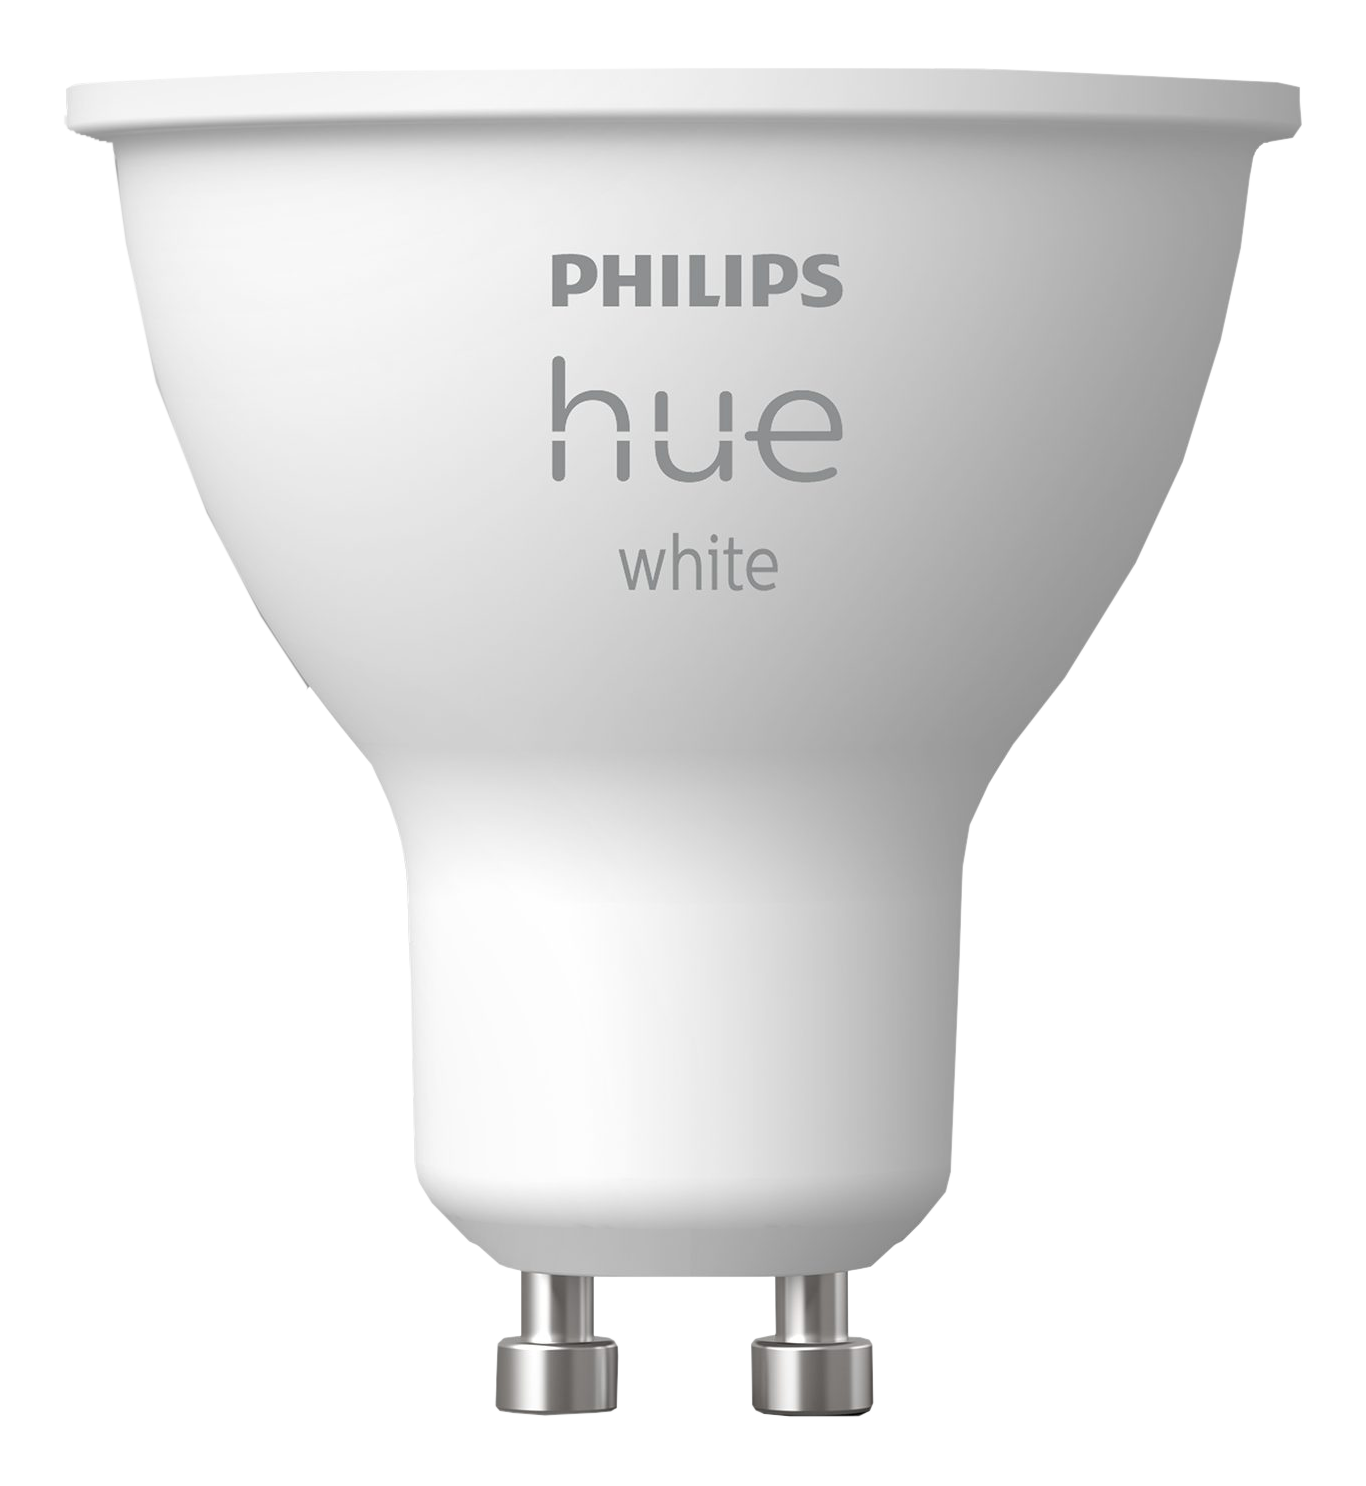 PHILIPS HUE White GU10 Einzelpack - LED Lampe (Weiss)